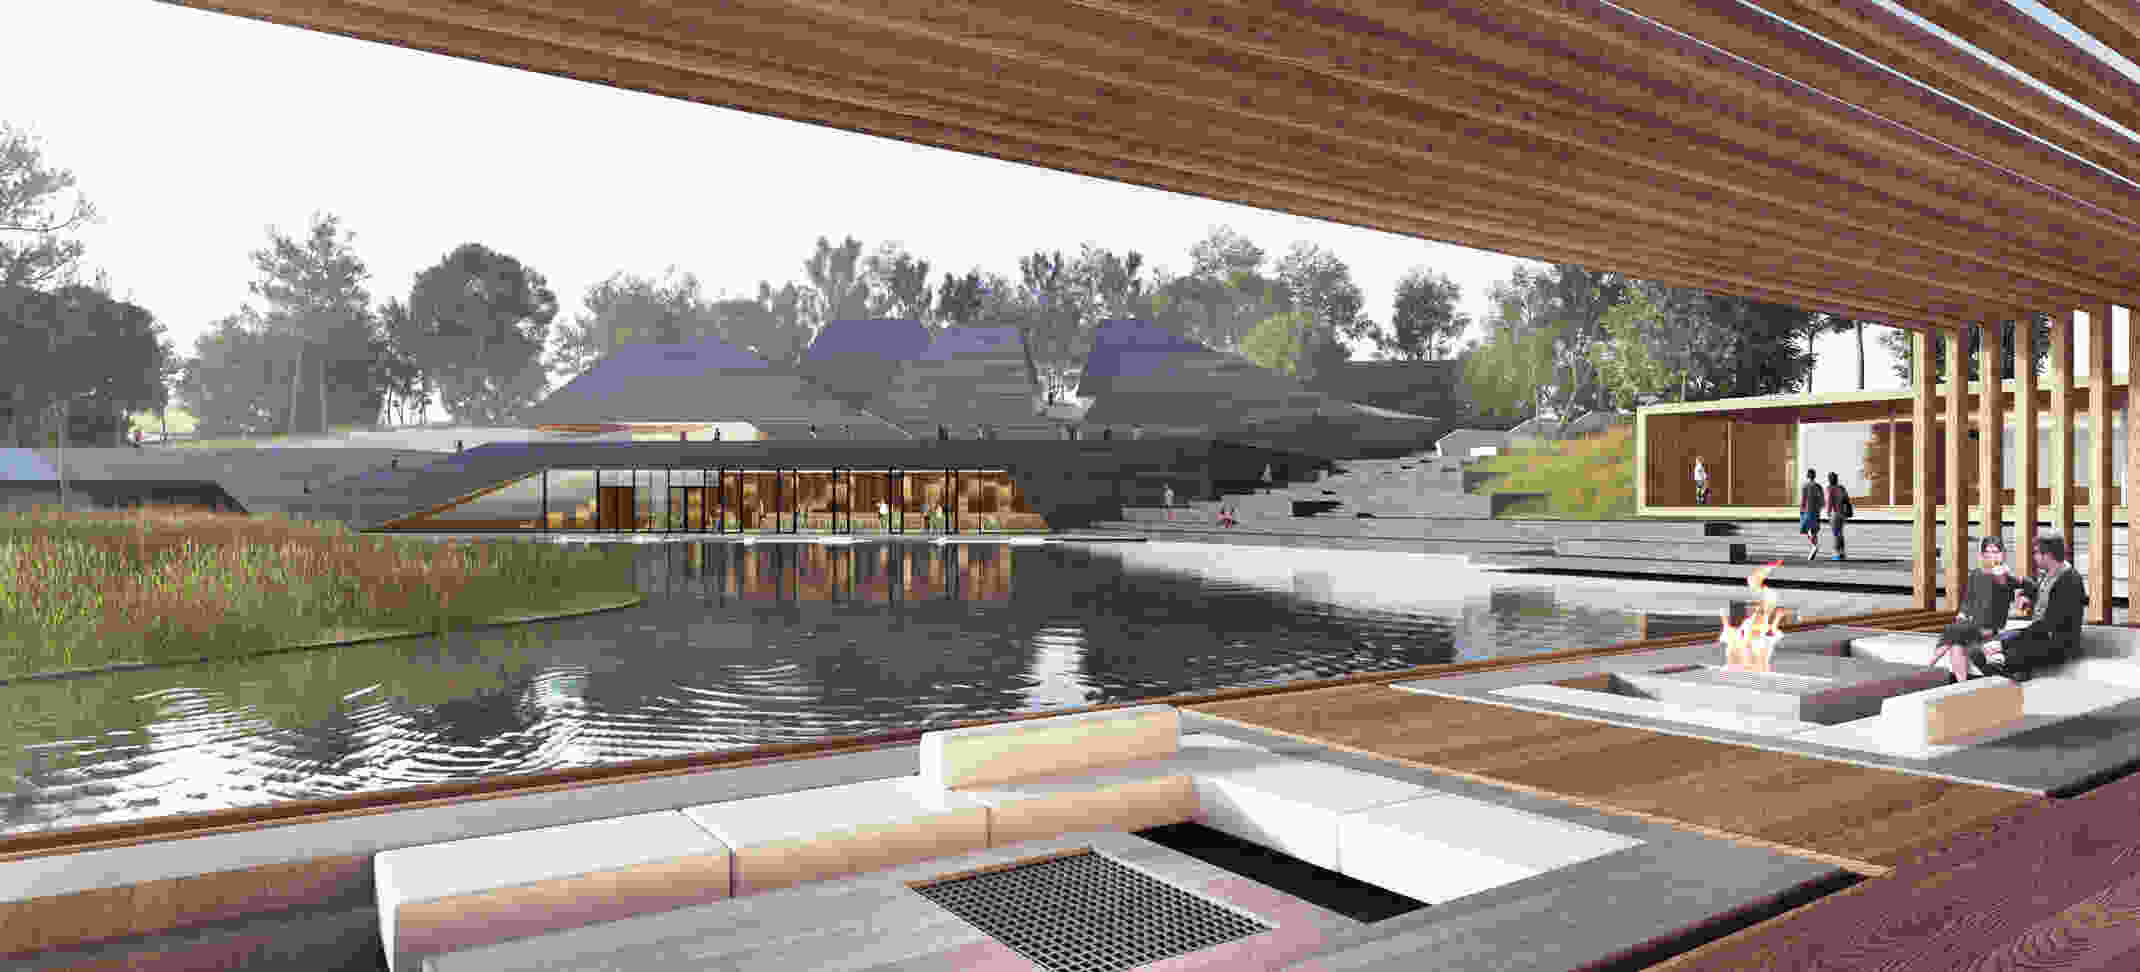 438 dm Greenhouse Ganzhou vis 003 virtual reality world pavilions